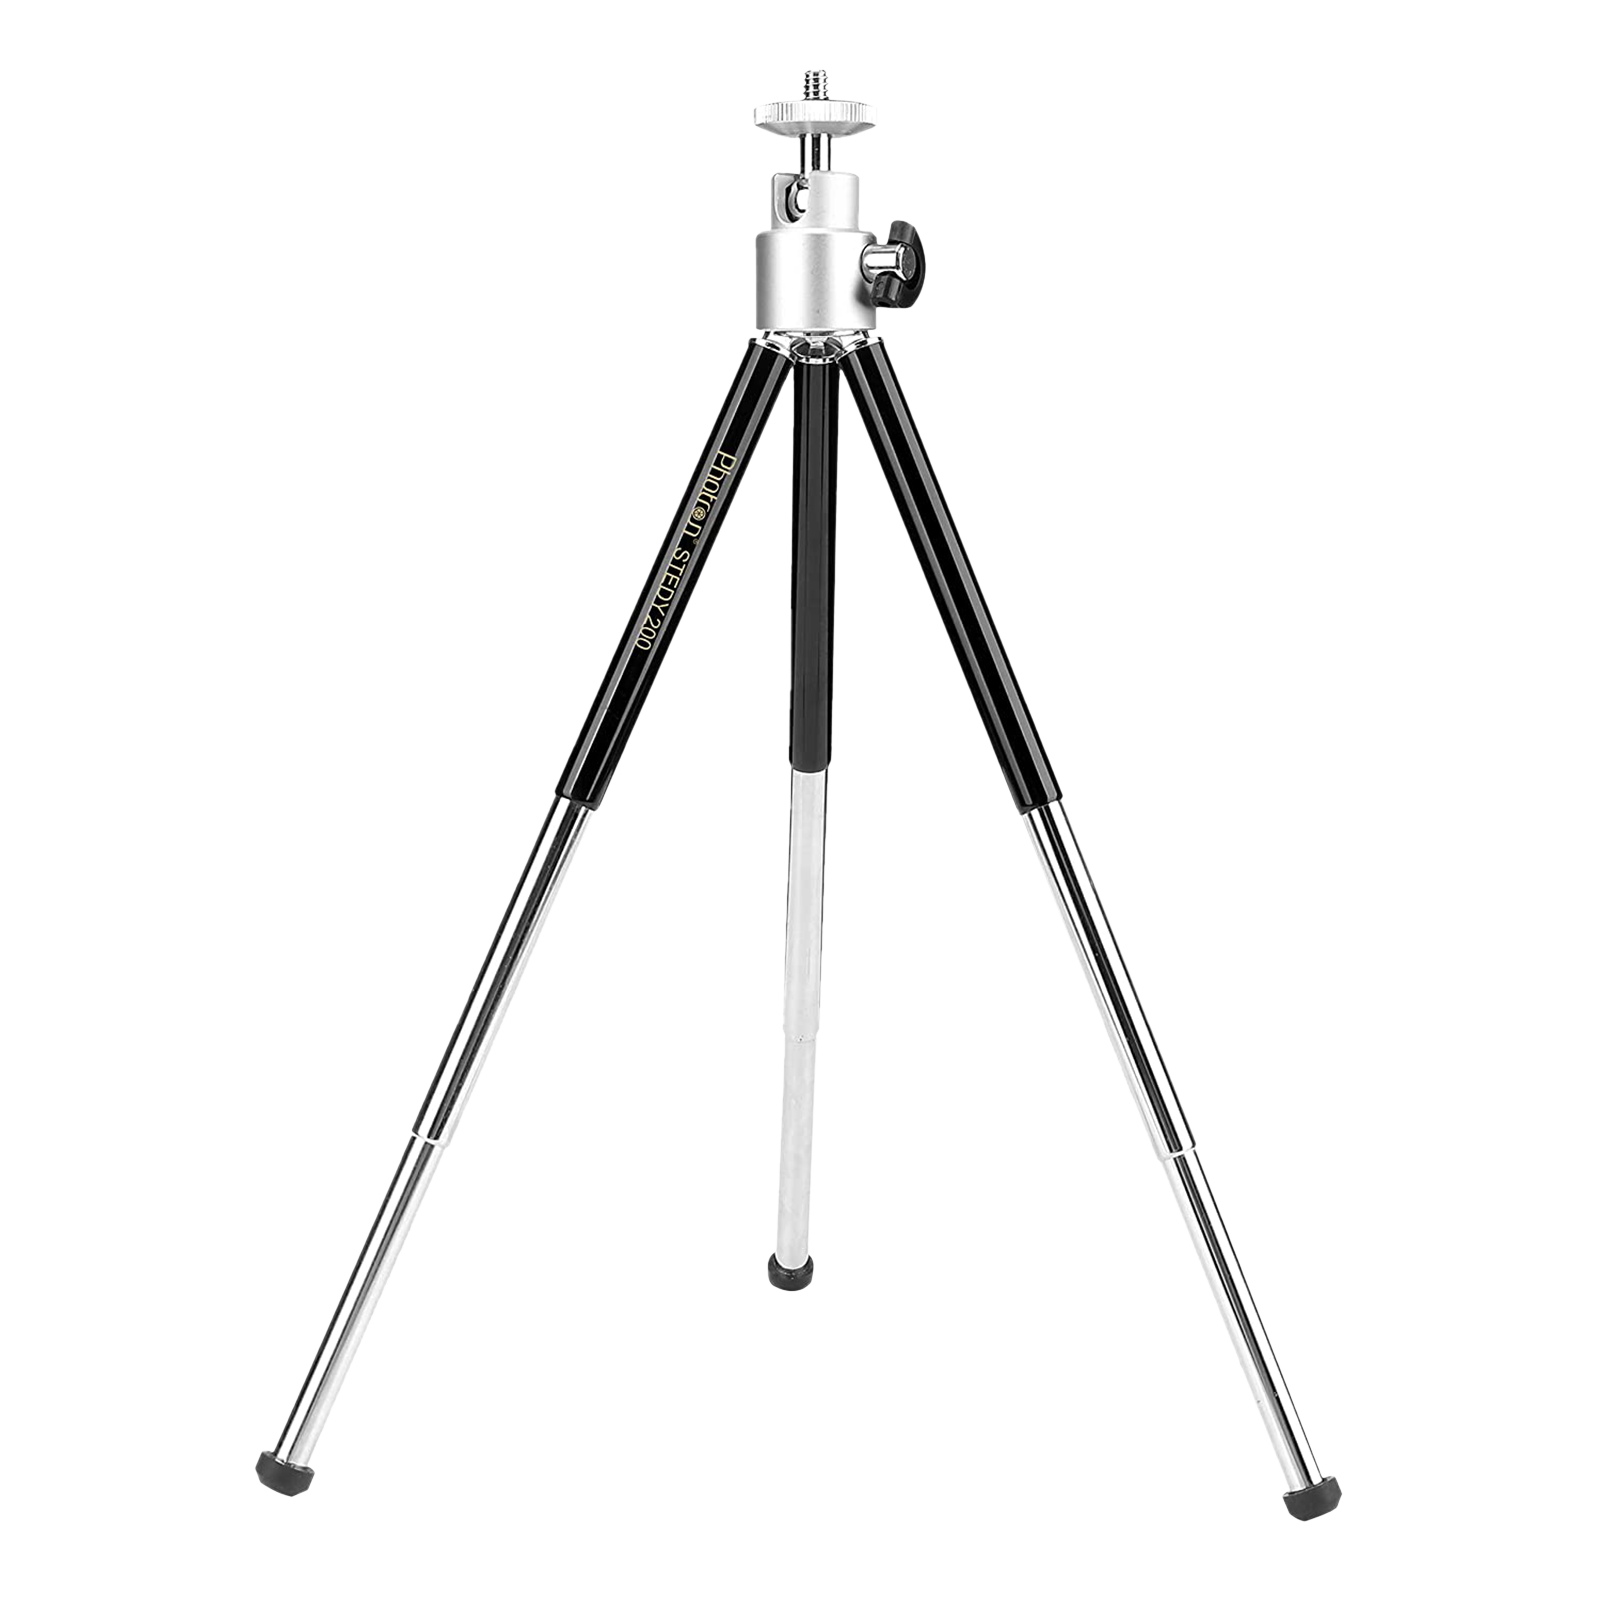 Photron Stedy 200 Mini Adjustable 26.5 cm Tripod For Digital Camera (Up to 1Kg, PH200M, Black)